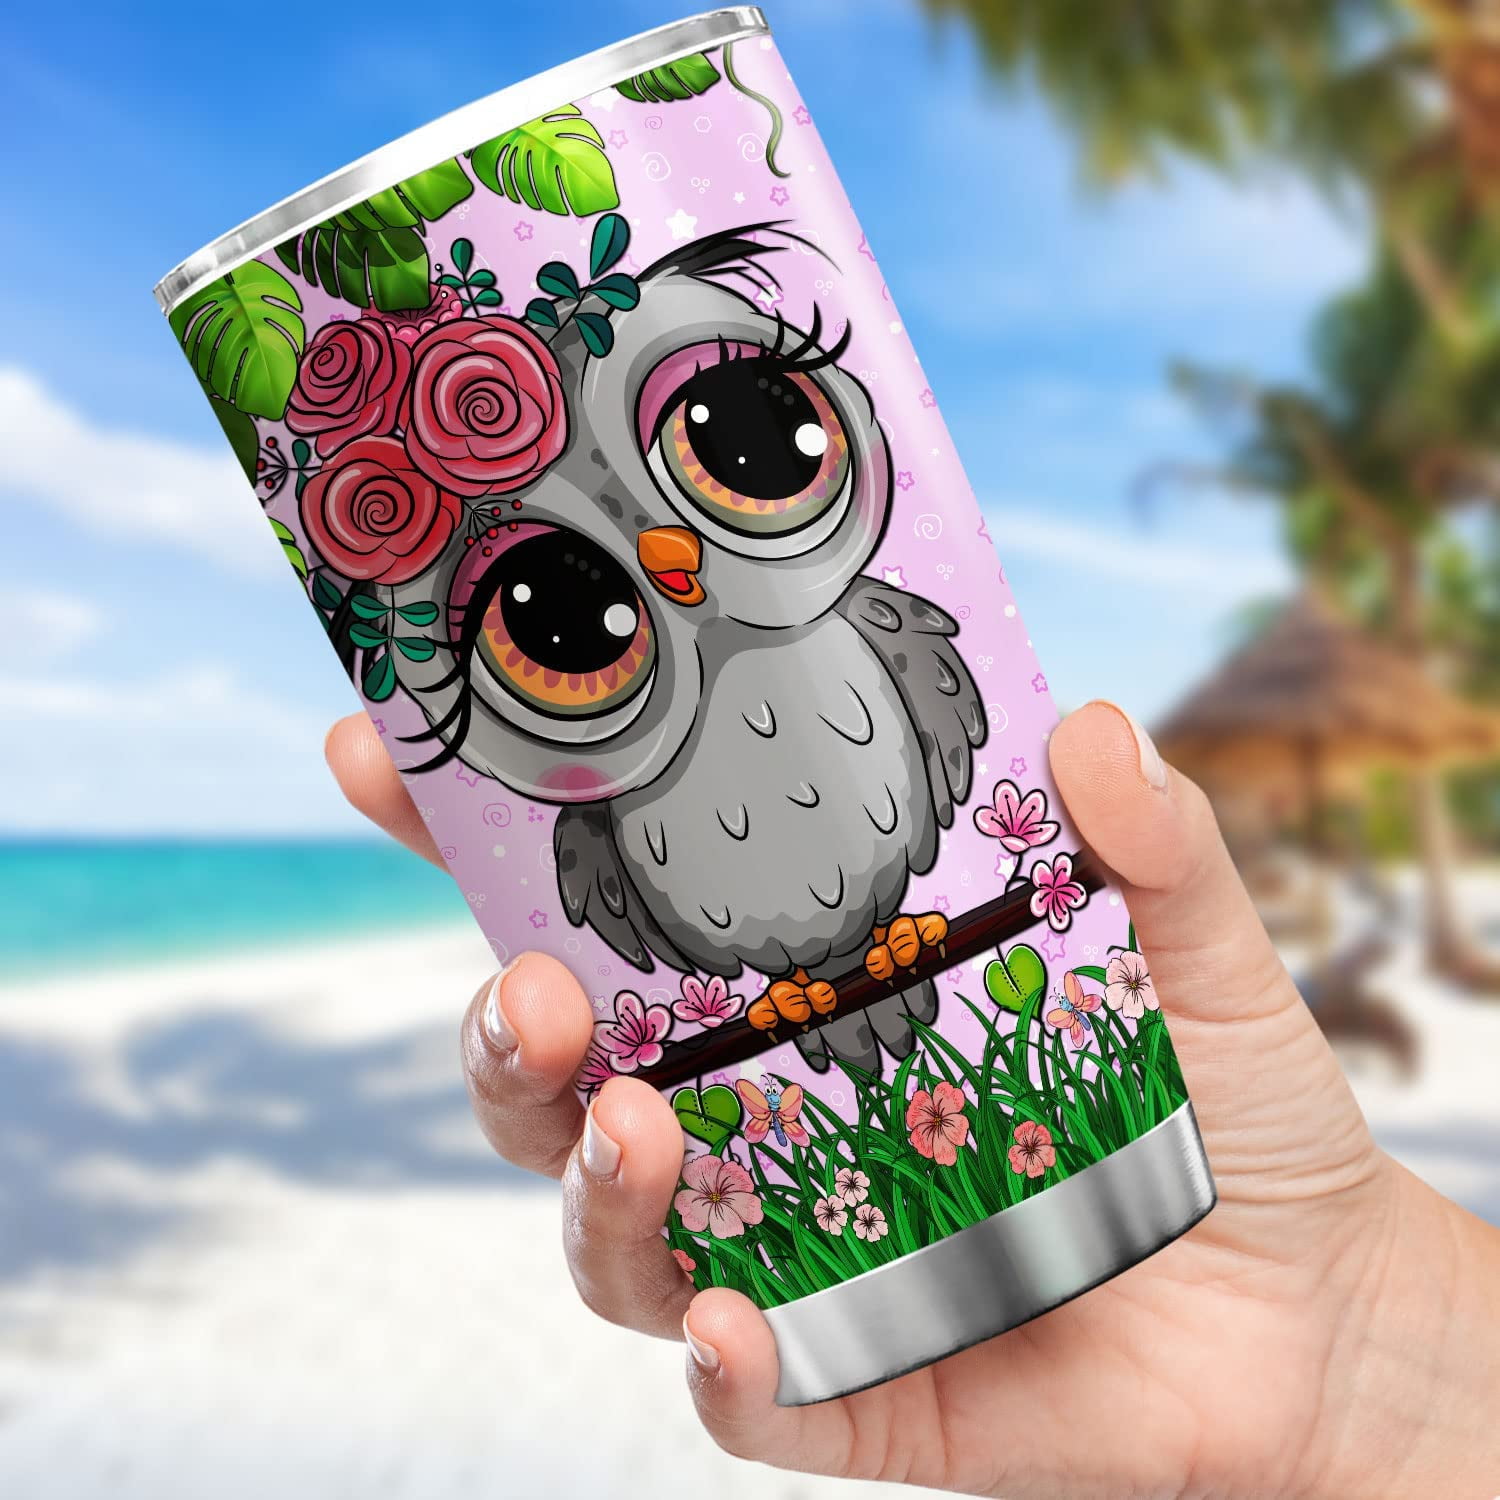 Funny Cute Pink Owl Pattern Travel Mug